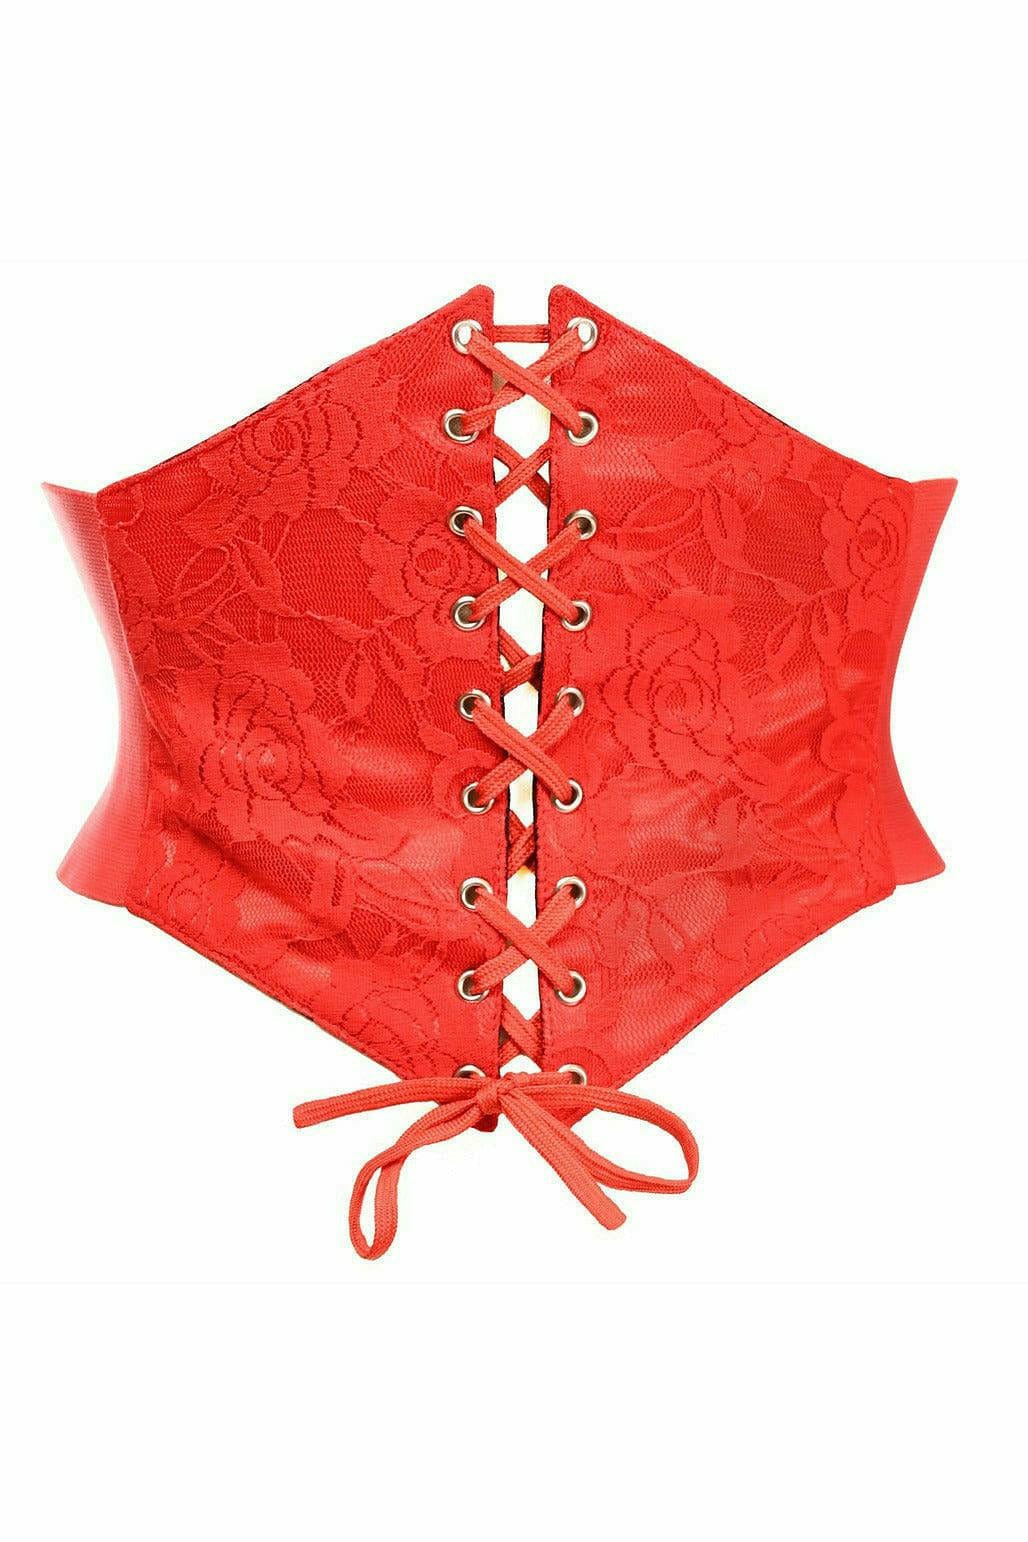 Sexy Red Lace Corset Belt Cincher Musotica.com